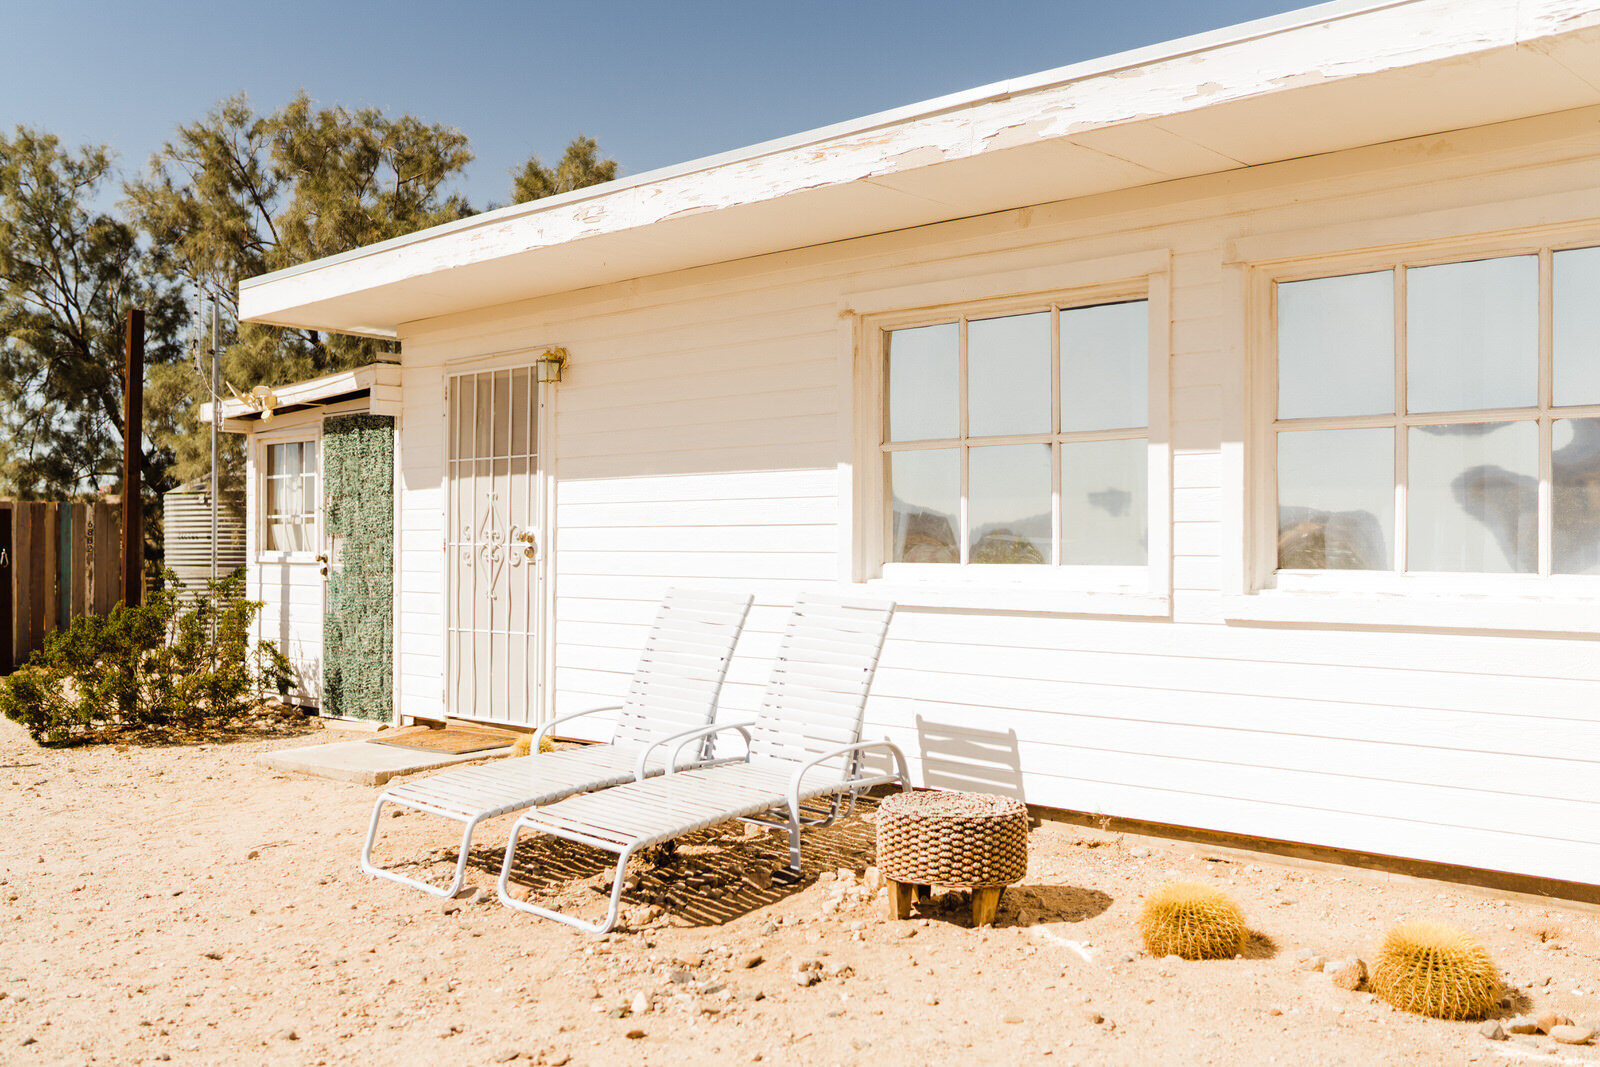 Sunny desert airbnb in Joshua Tree- Cactus Mountain Retreat Tiny Home | photo by Kept Record  | www.keptrecord.com